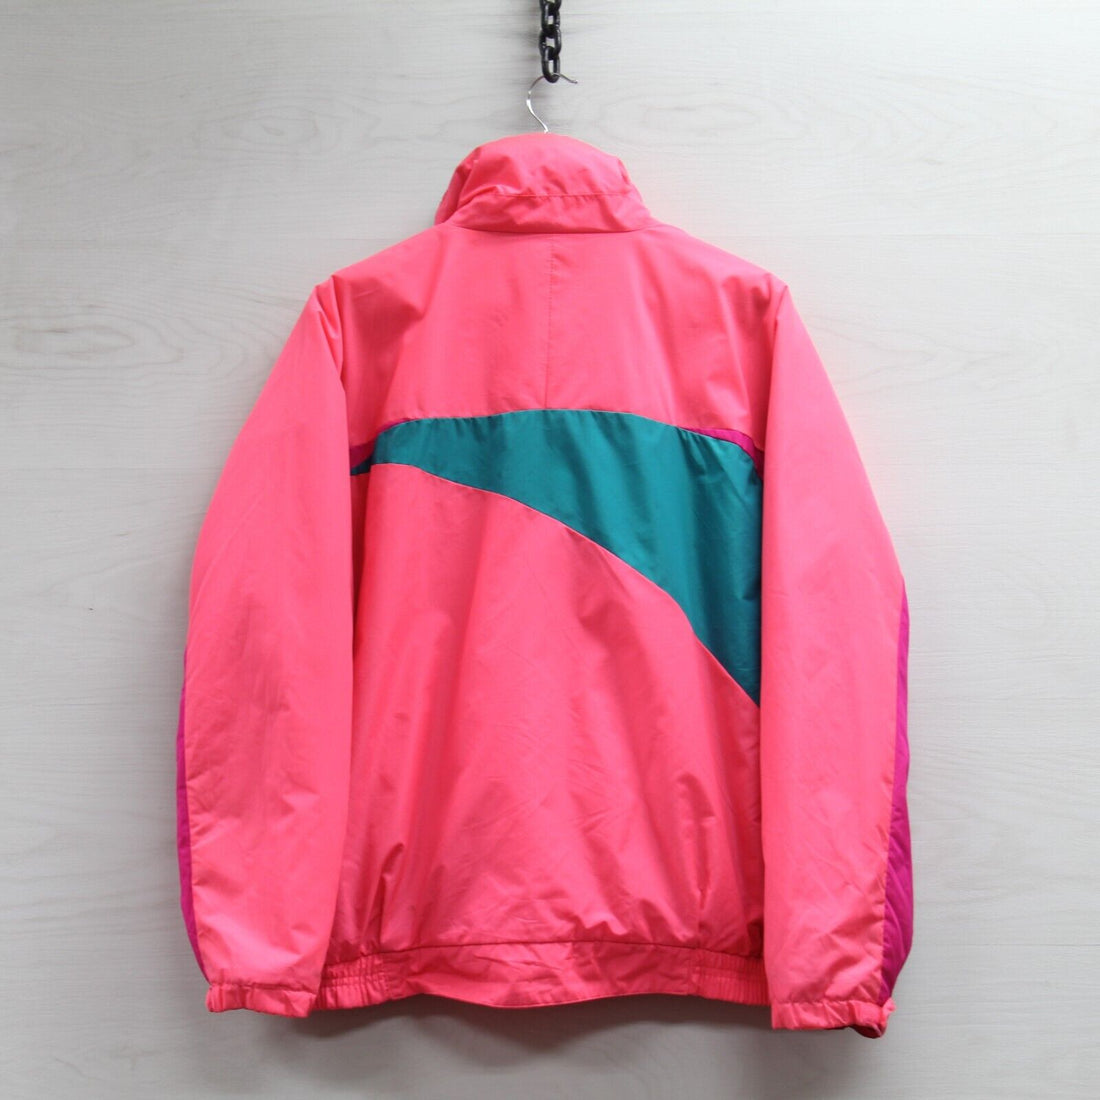 Vintage Nike Aqua Gear Bomber Jacket Size Large Pink 90s Fleece Lined